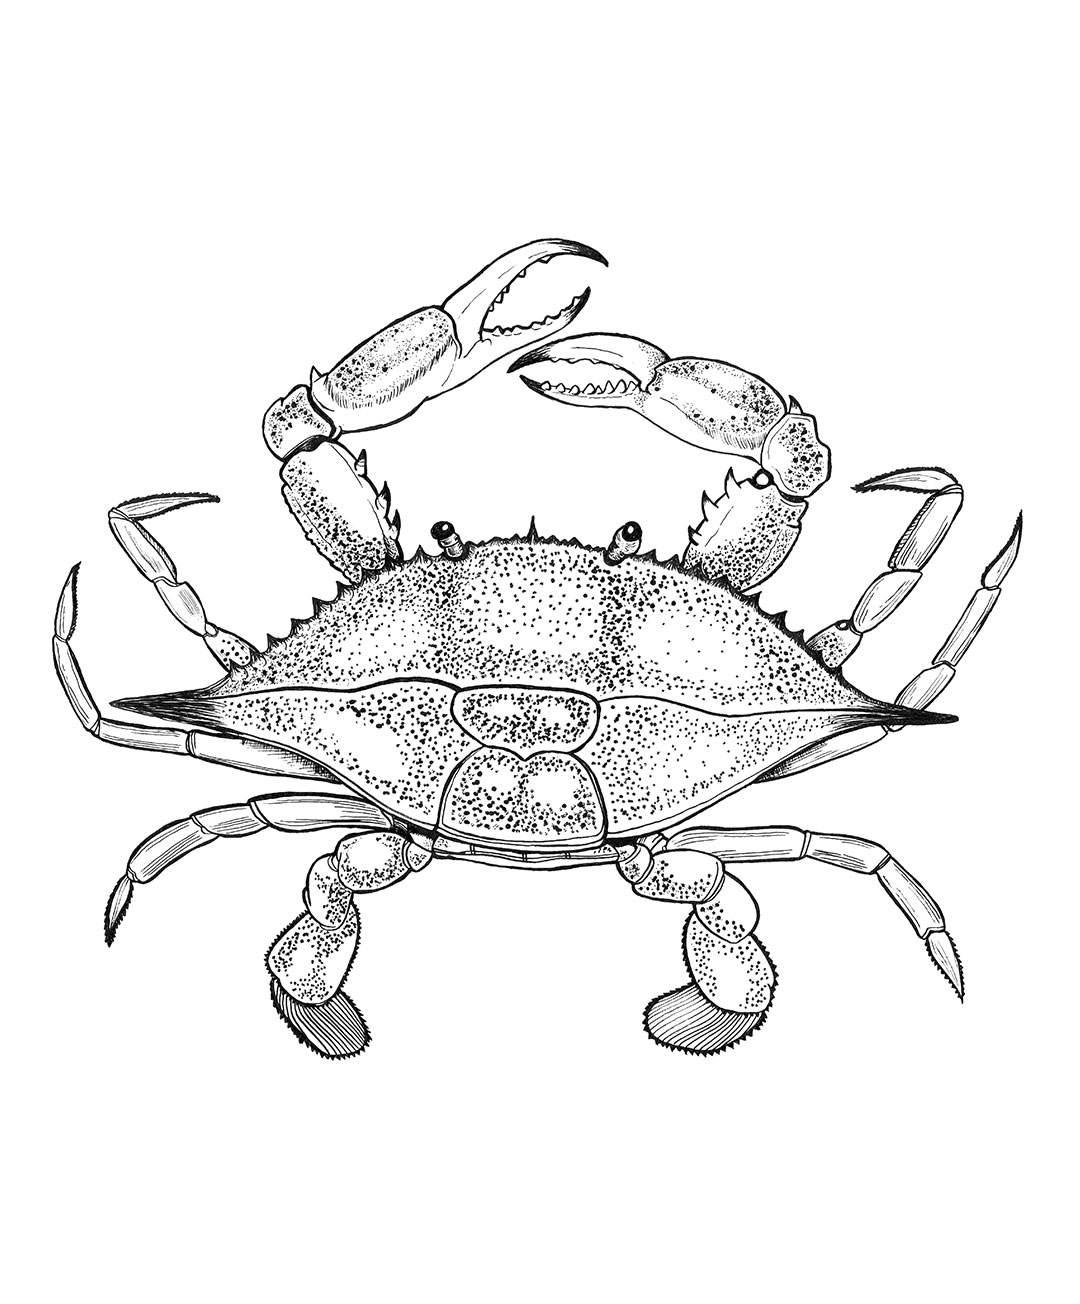 Crab Line Drawing At GetDrawings Free Download.